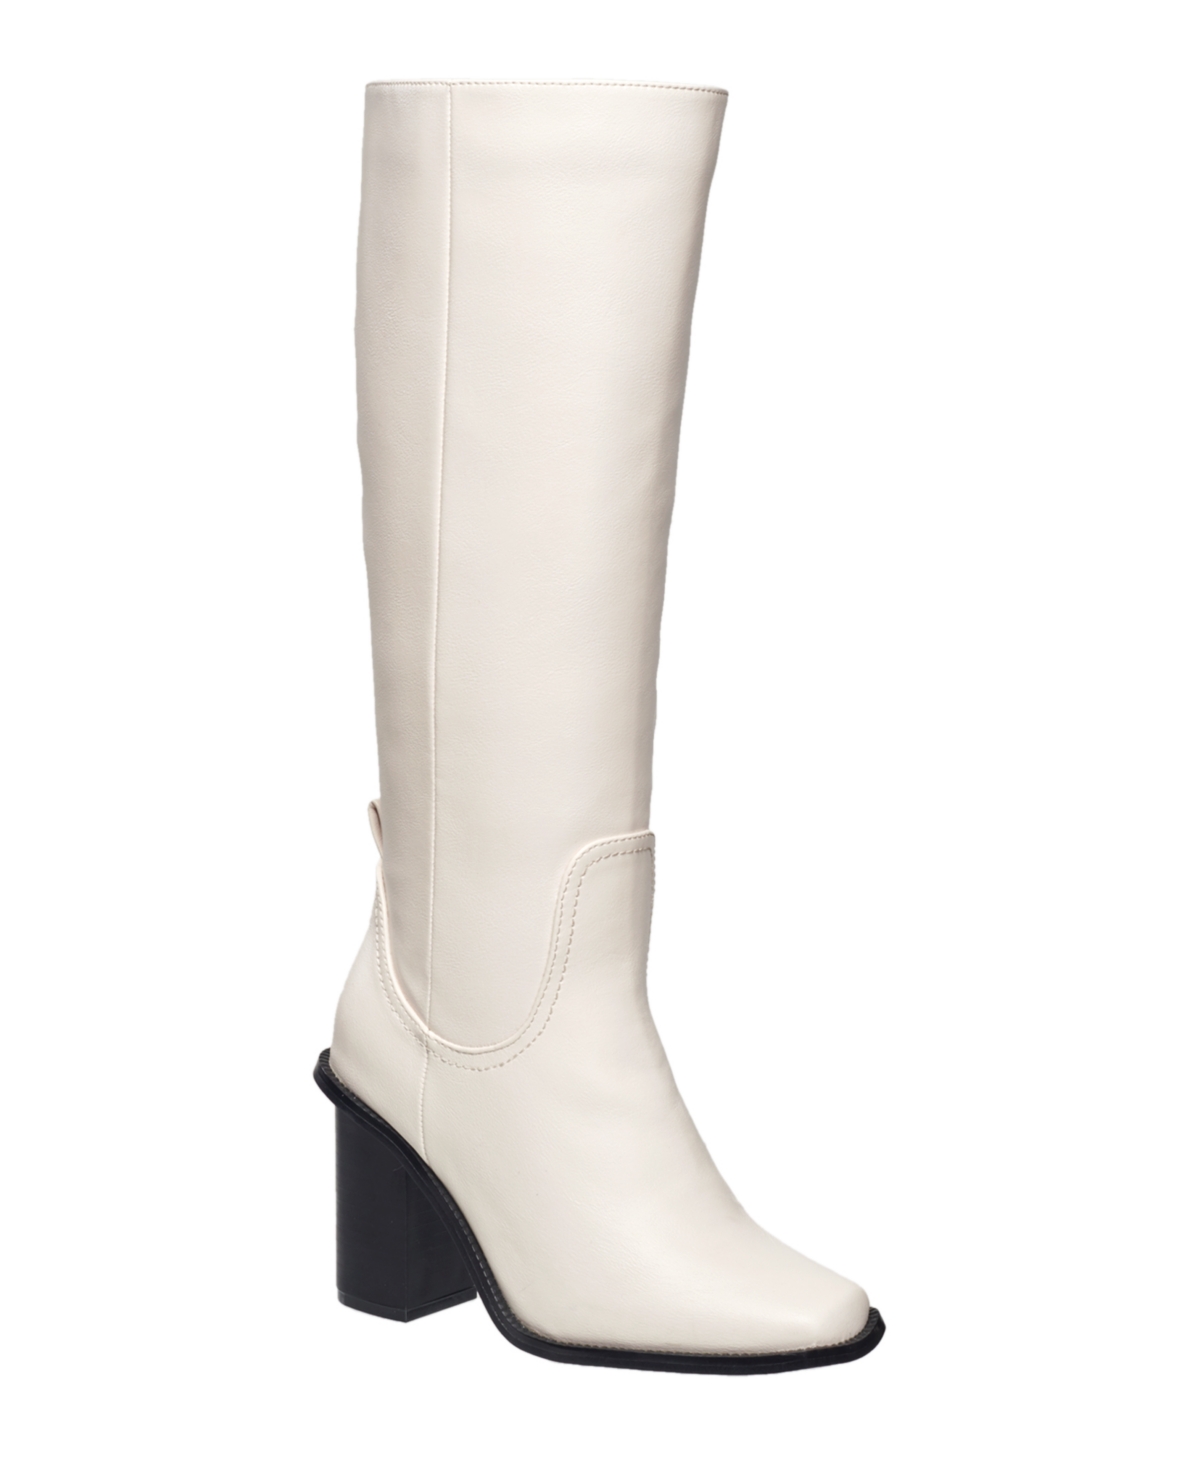 Women's Hailee Knee High Heel Riding Boots - Winter White